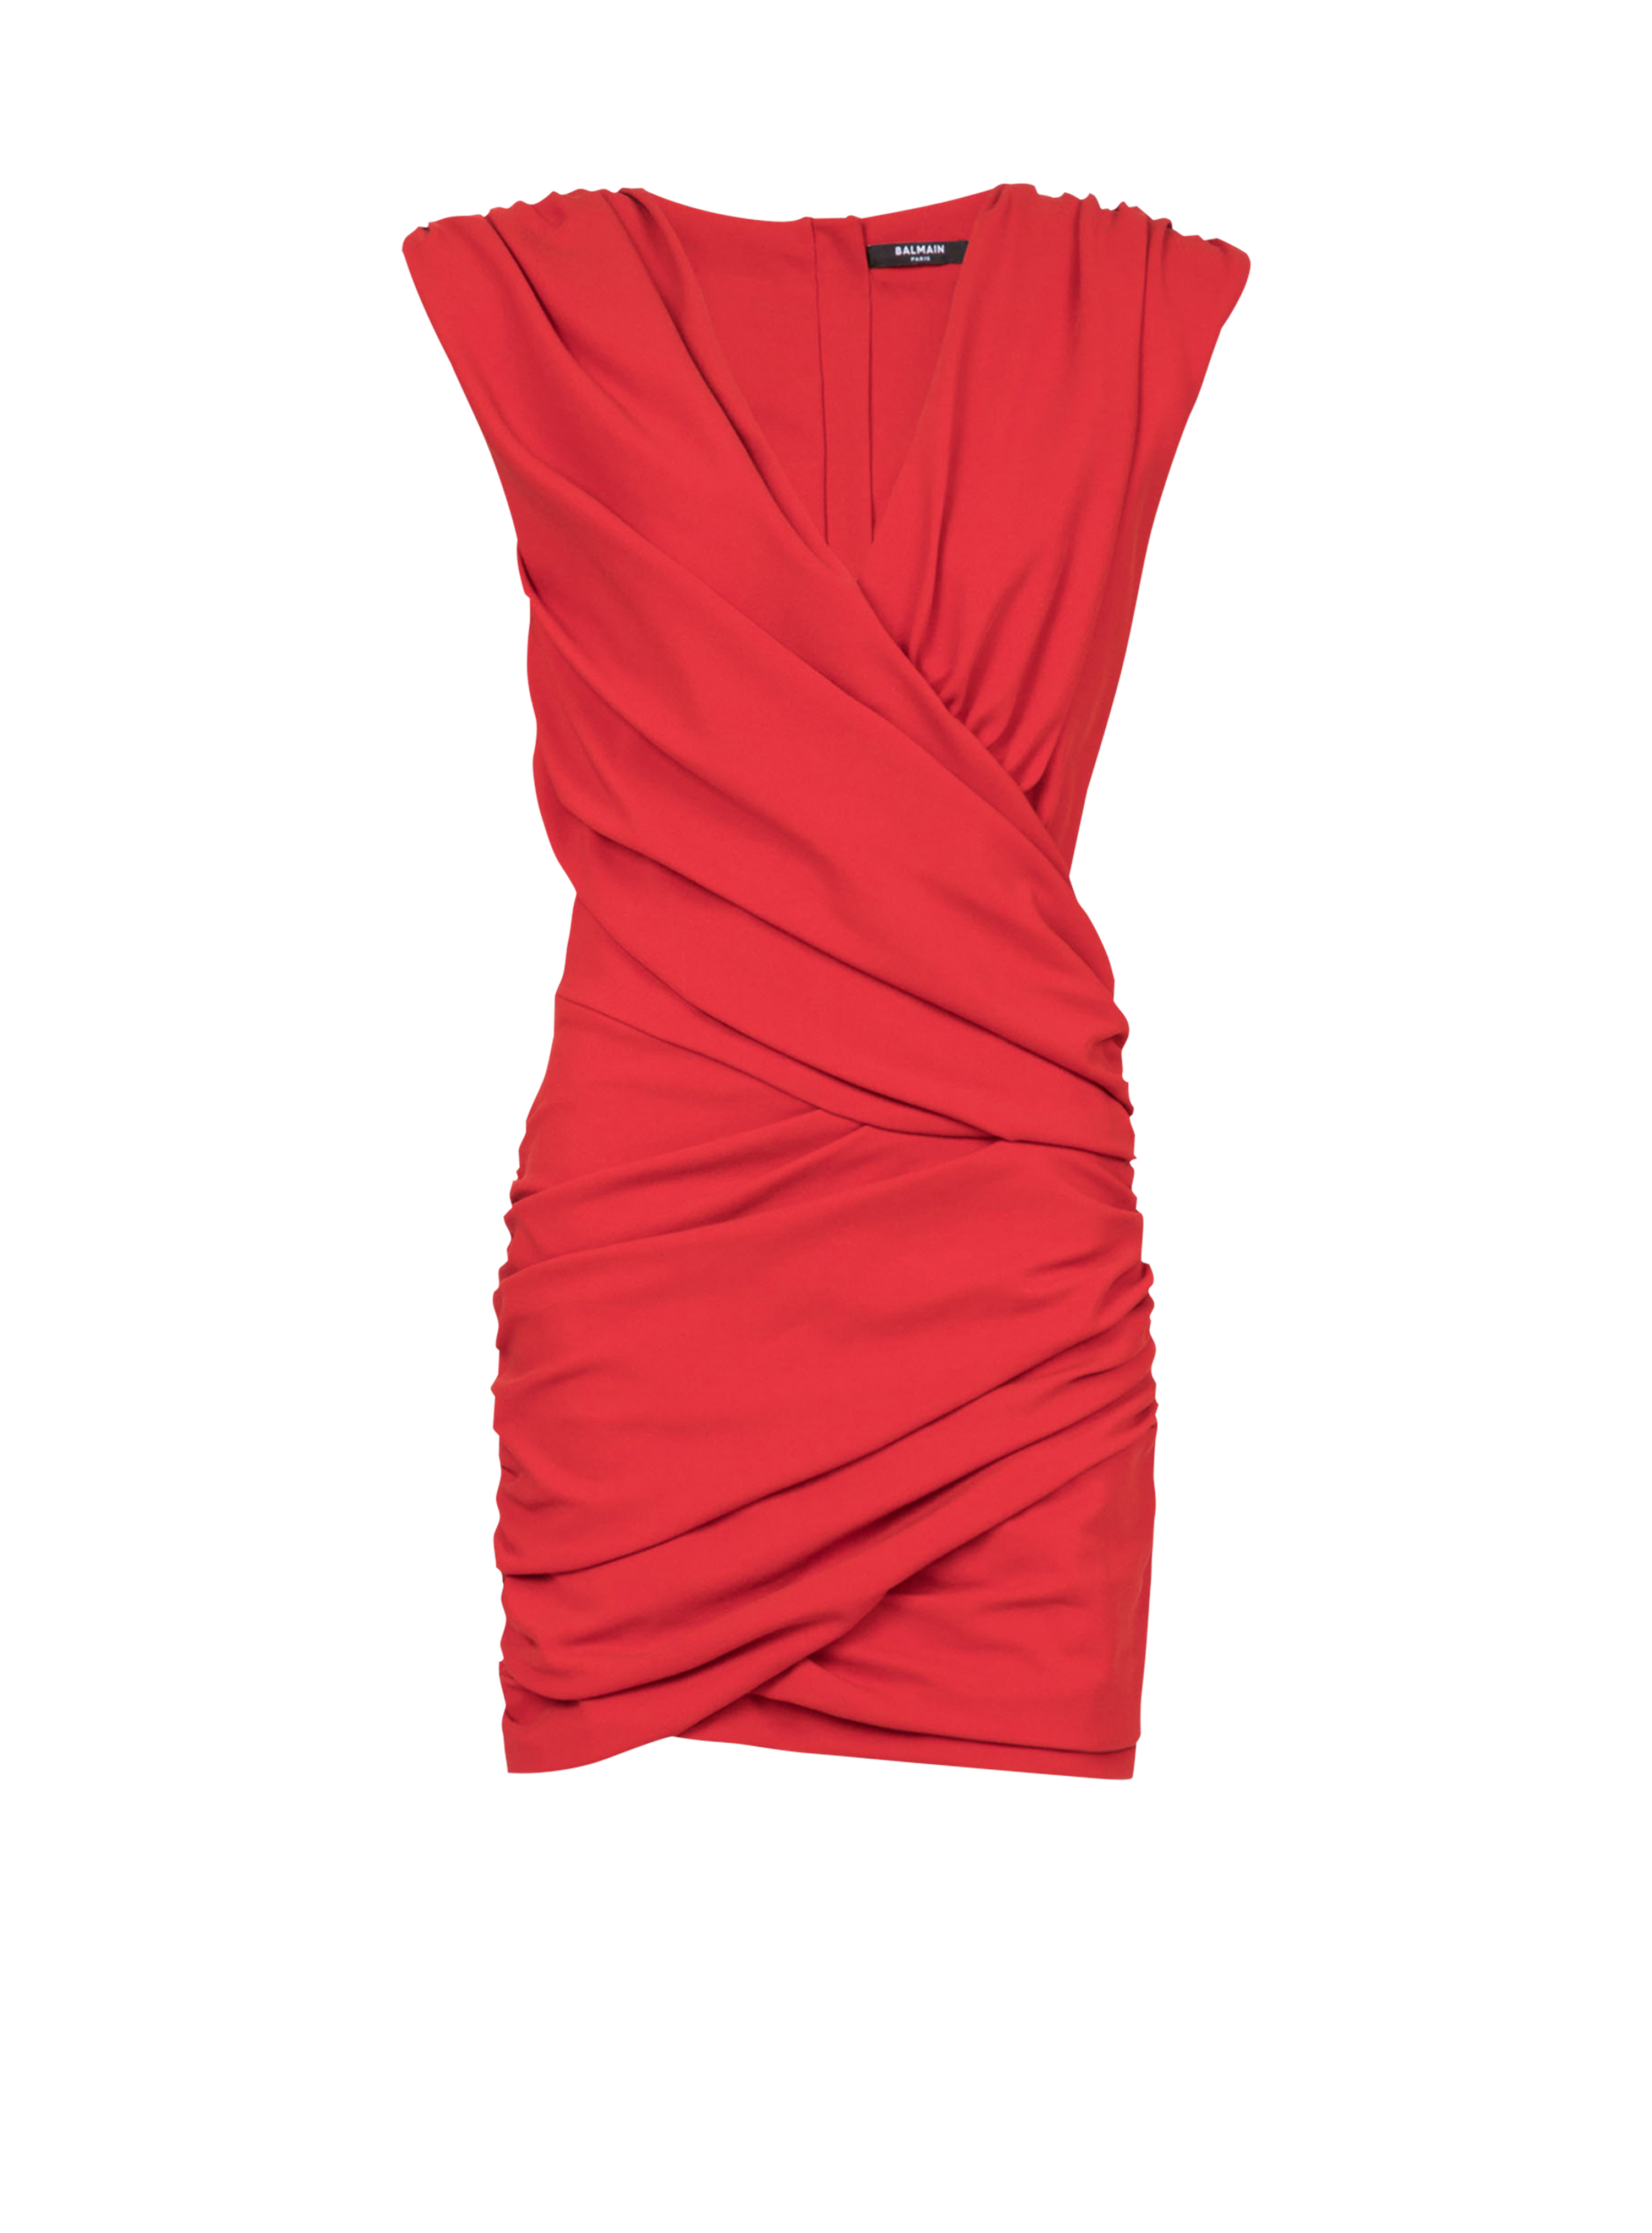 Short draped jersey dress, red, hi-res